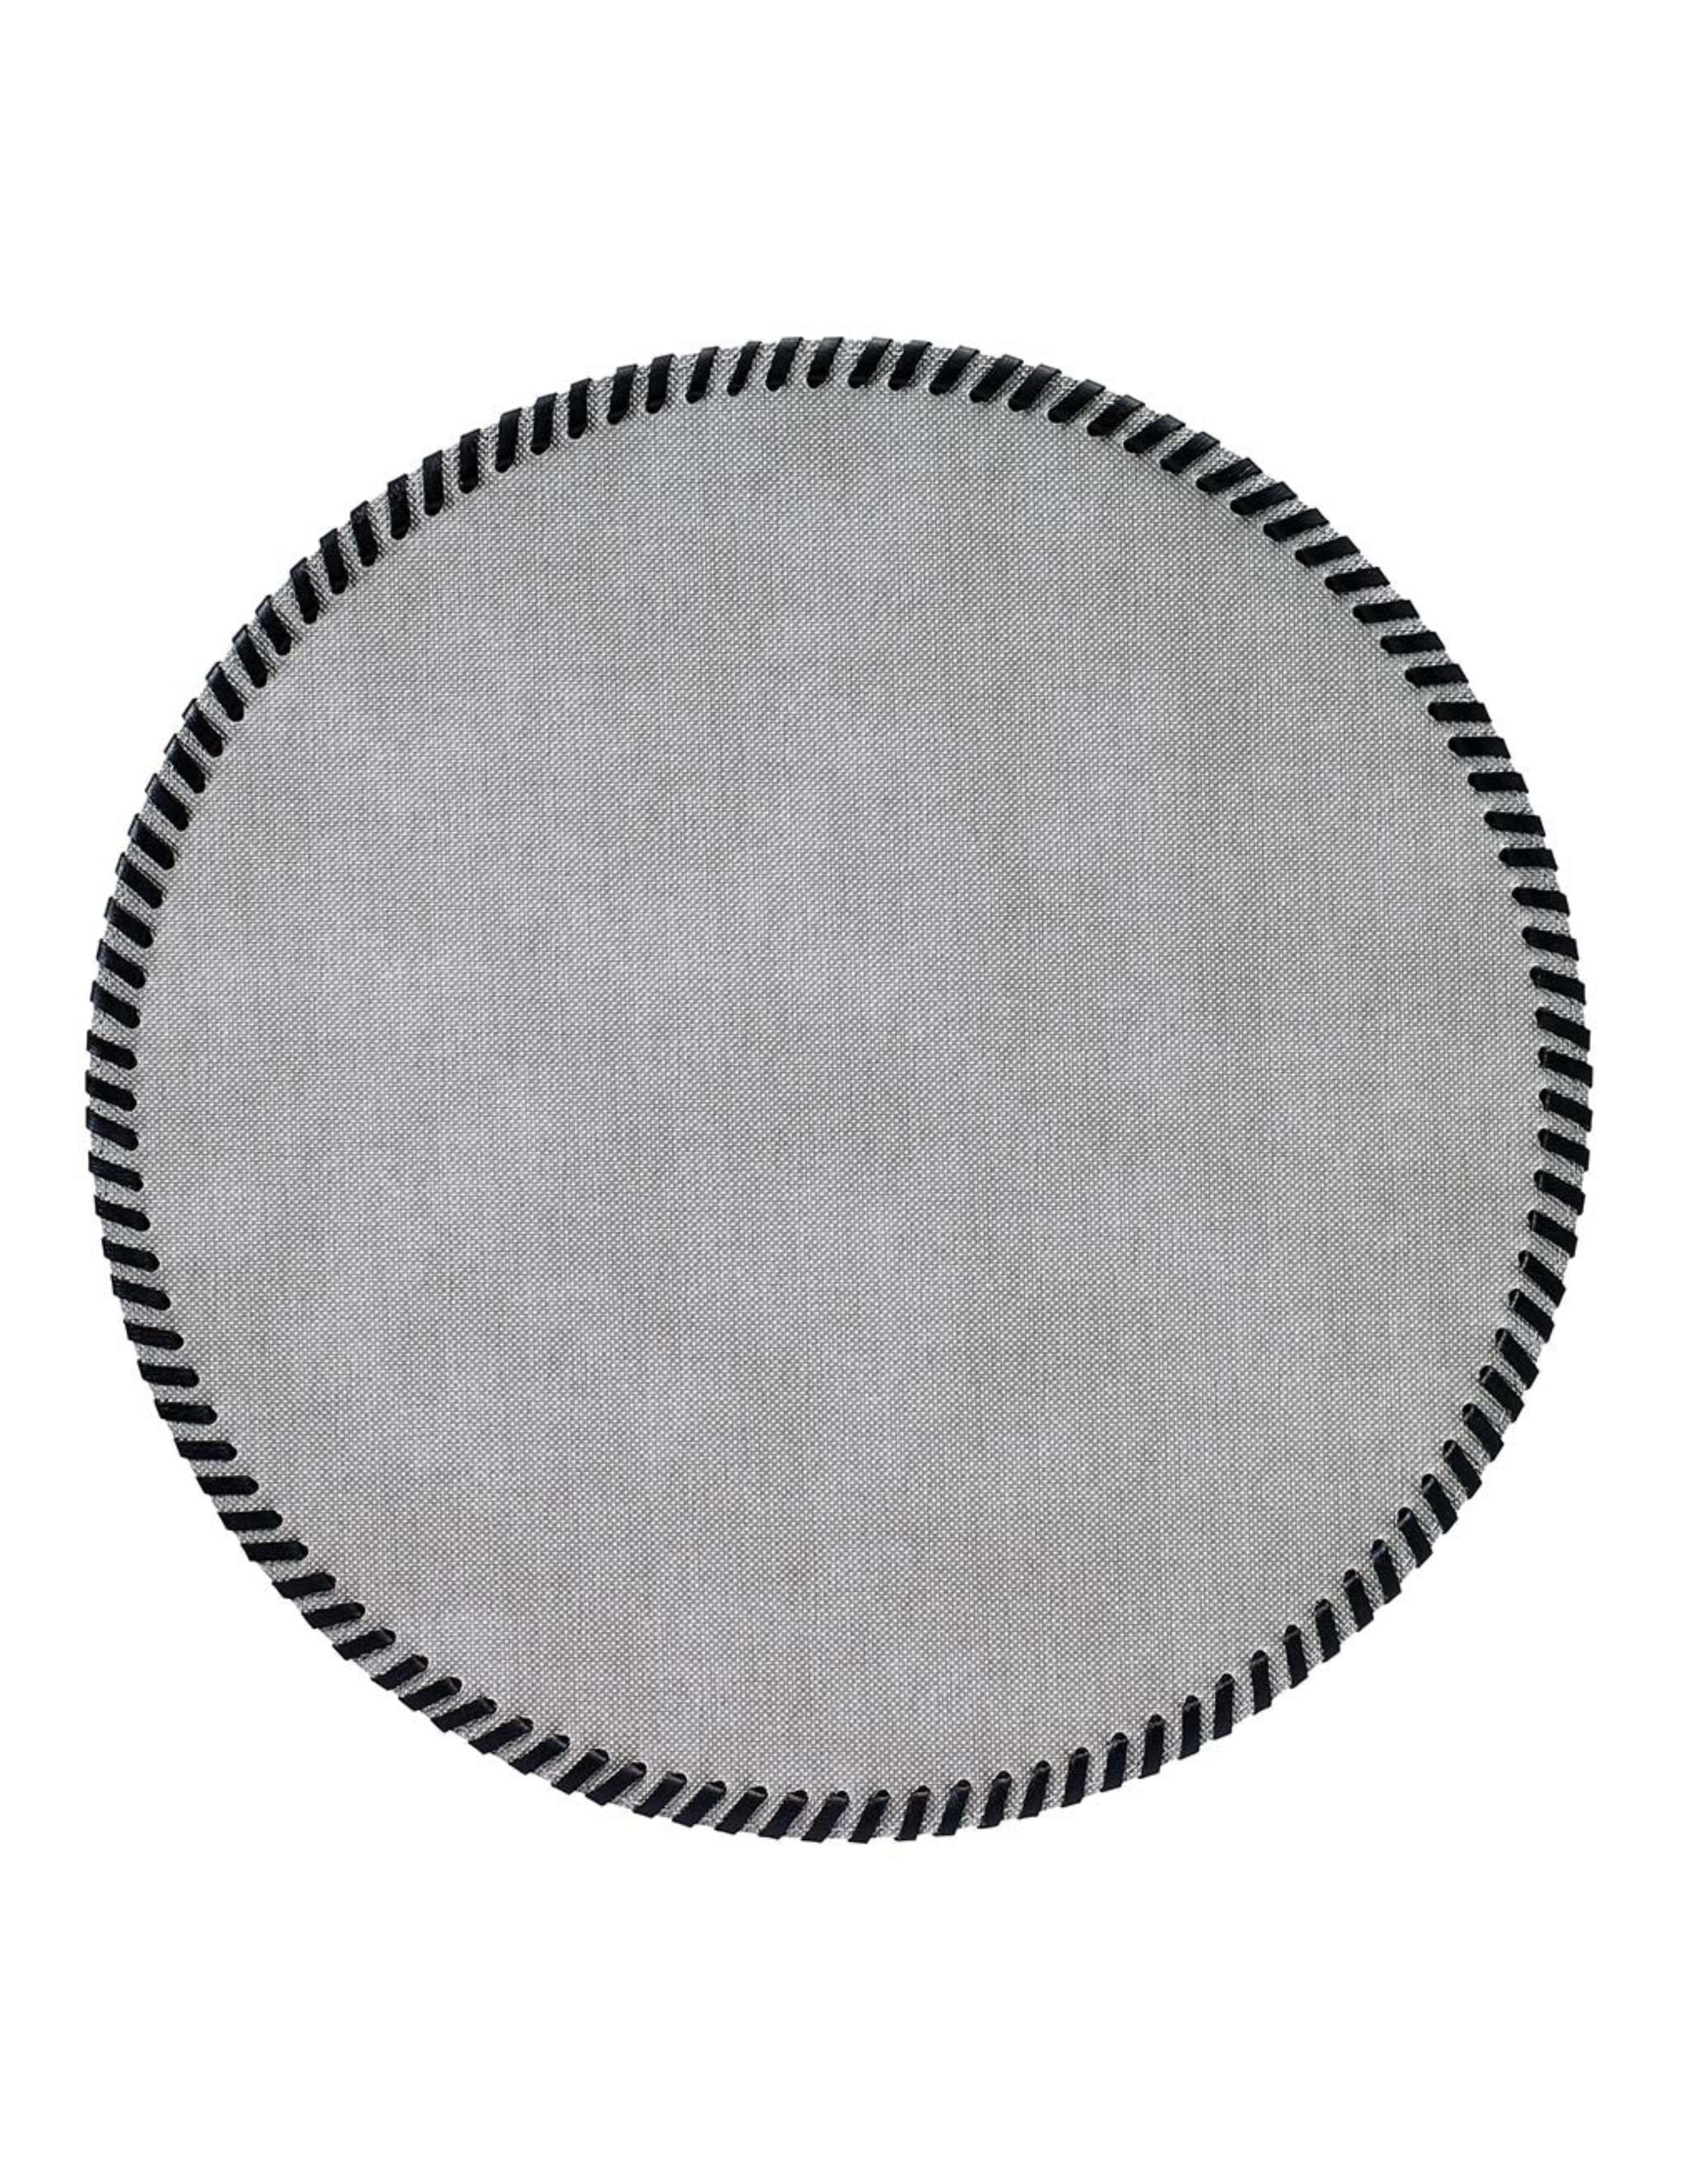 Wipstitch Round Placemat Set of 4 - Gray